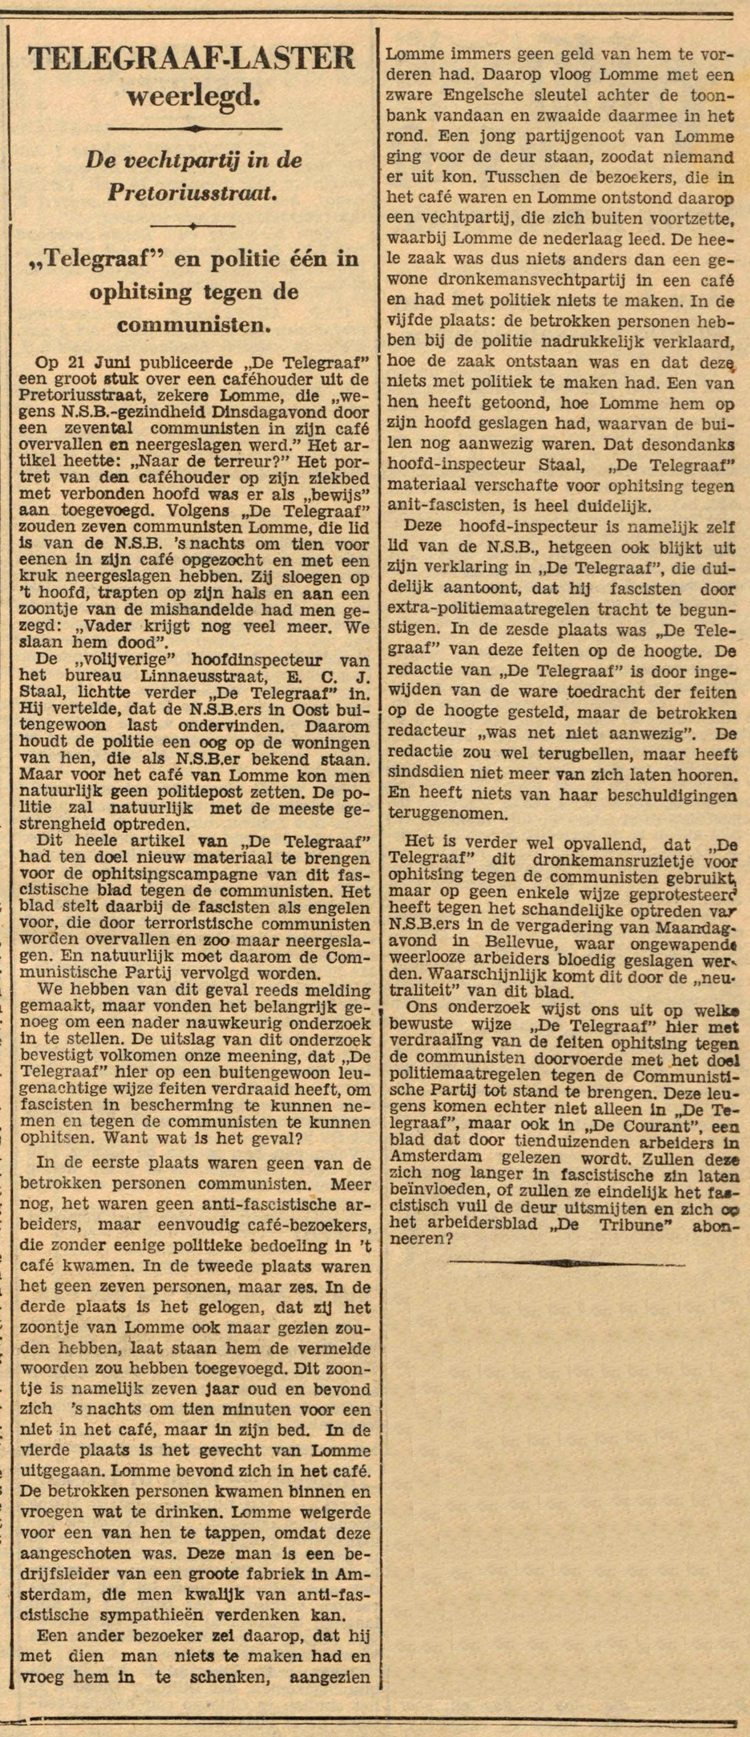 02 juli 1934 - Telegraaf-laster weerlegd.  